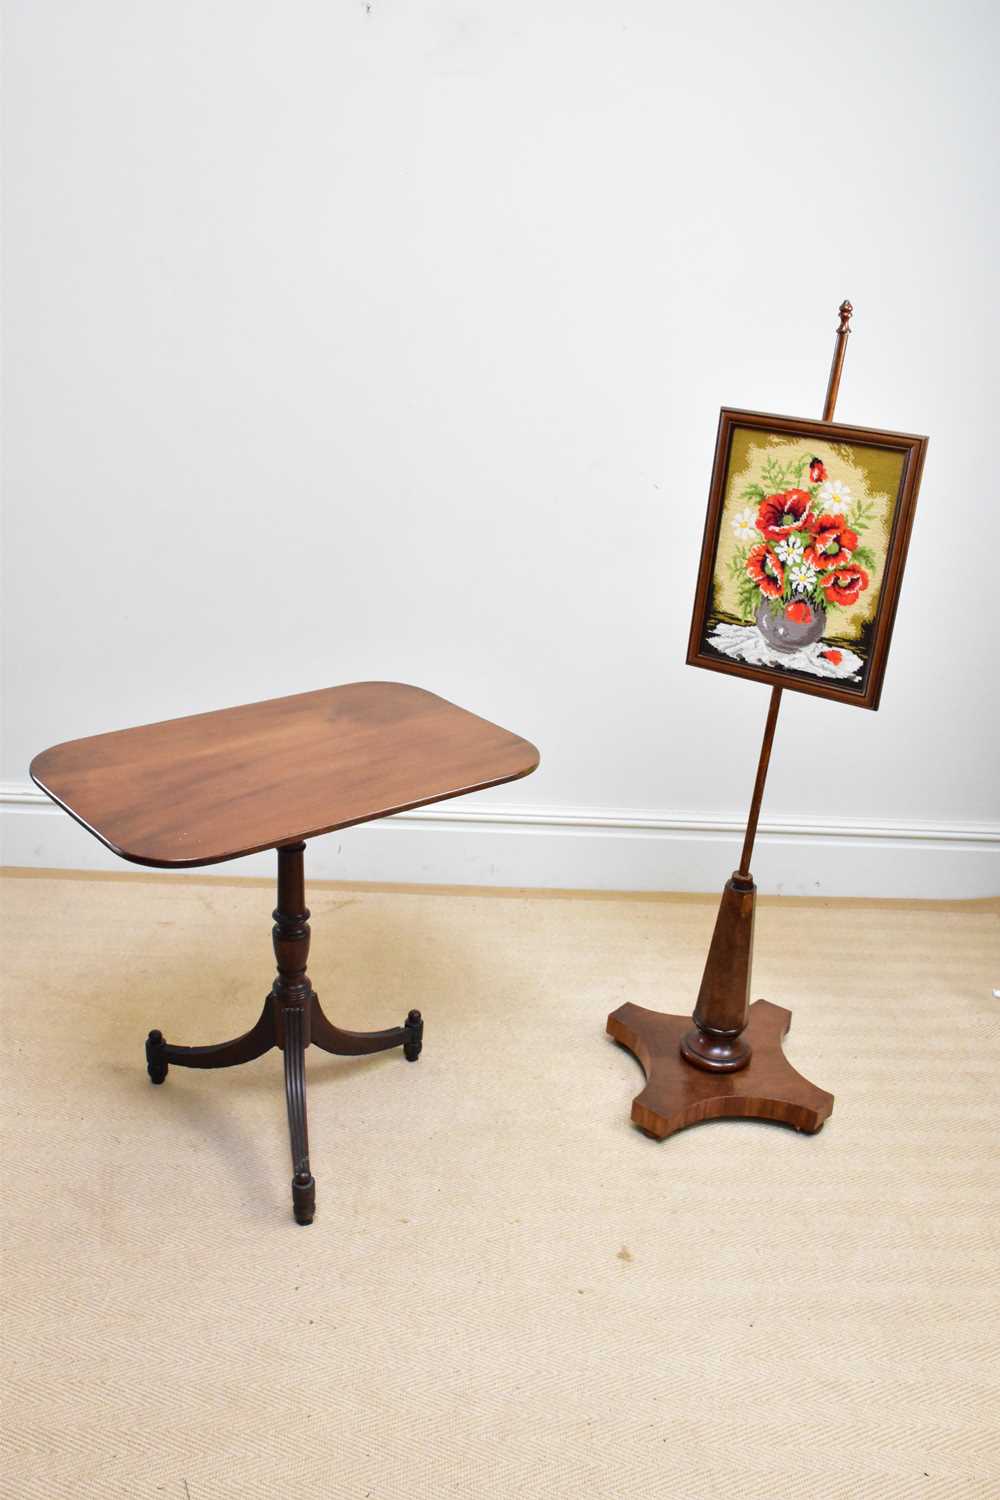 A 19th century mahogany tilt-top tripod table, height 72cm, width 77cm, depth 50cm, and a